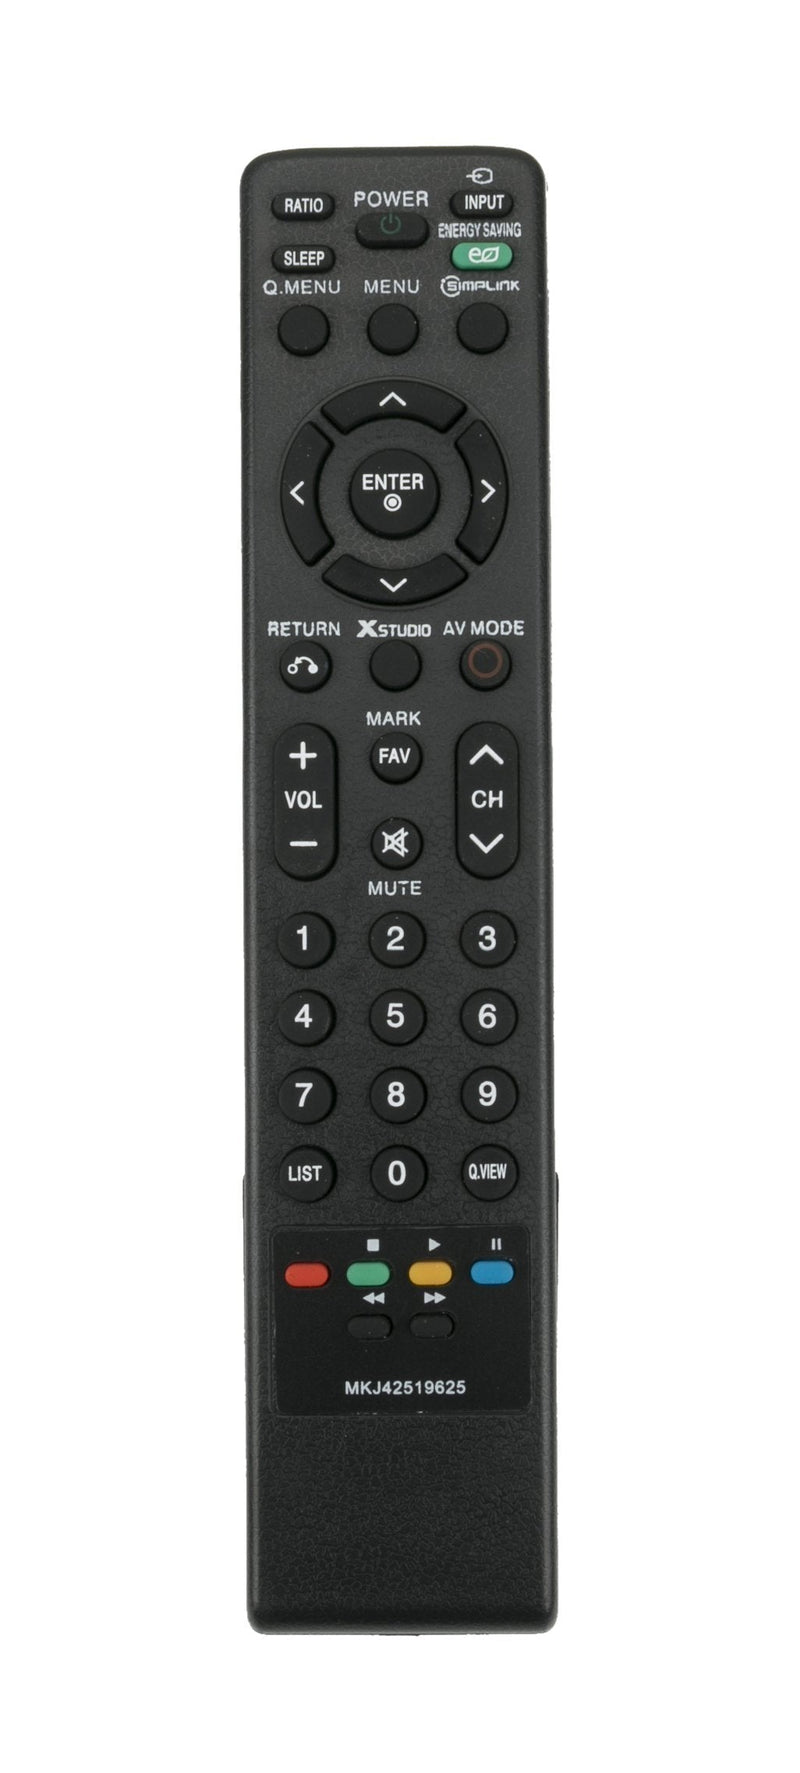 New MKJ42519625 Remote Control for LG LCD TV 42LH40 42LH40UA 42LH55 42LH55UA 47LH40UA 47LH55 47LH55UA 55LH40 55LH400C 55LH400CUA 55LH40UA 55LH55 32LH40 32LH40UA 37LH40 37LH40UA 37LH55 37LH55UA - LeoForward Australia